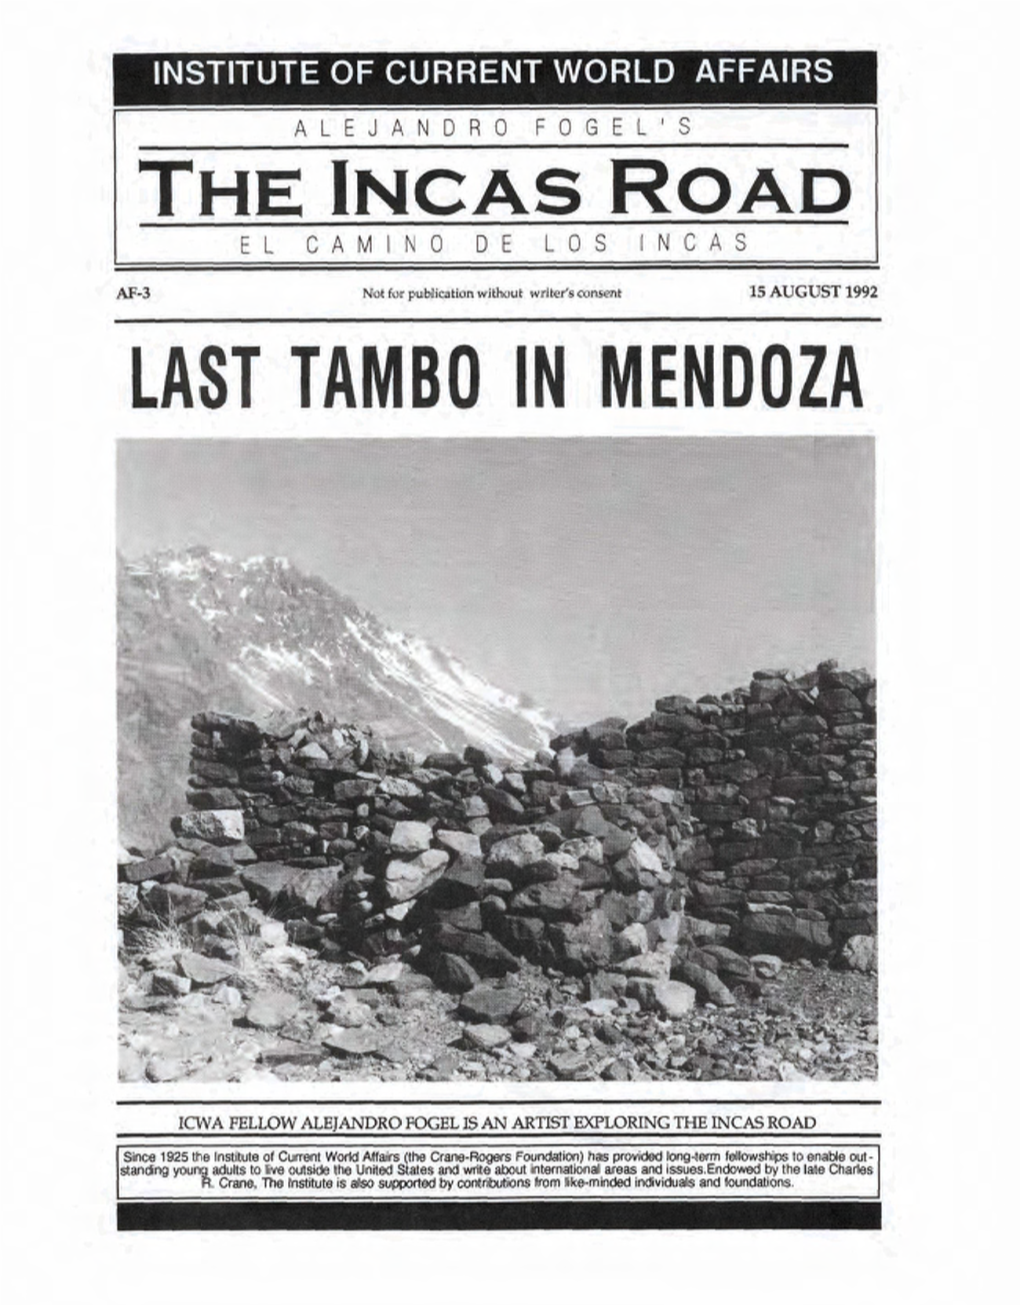 The Incas Road: Last Tambo in Mendoza